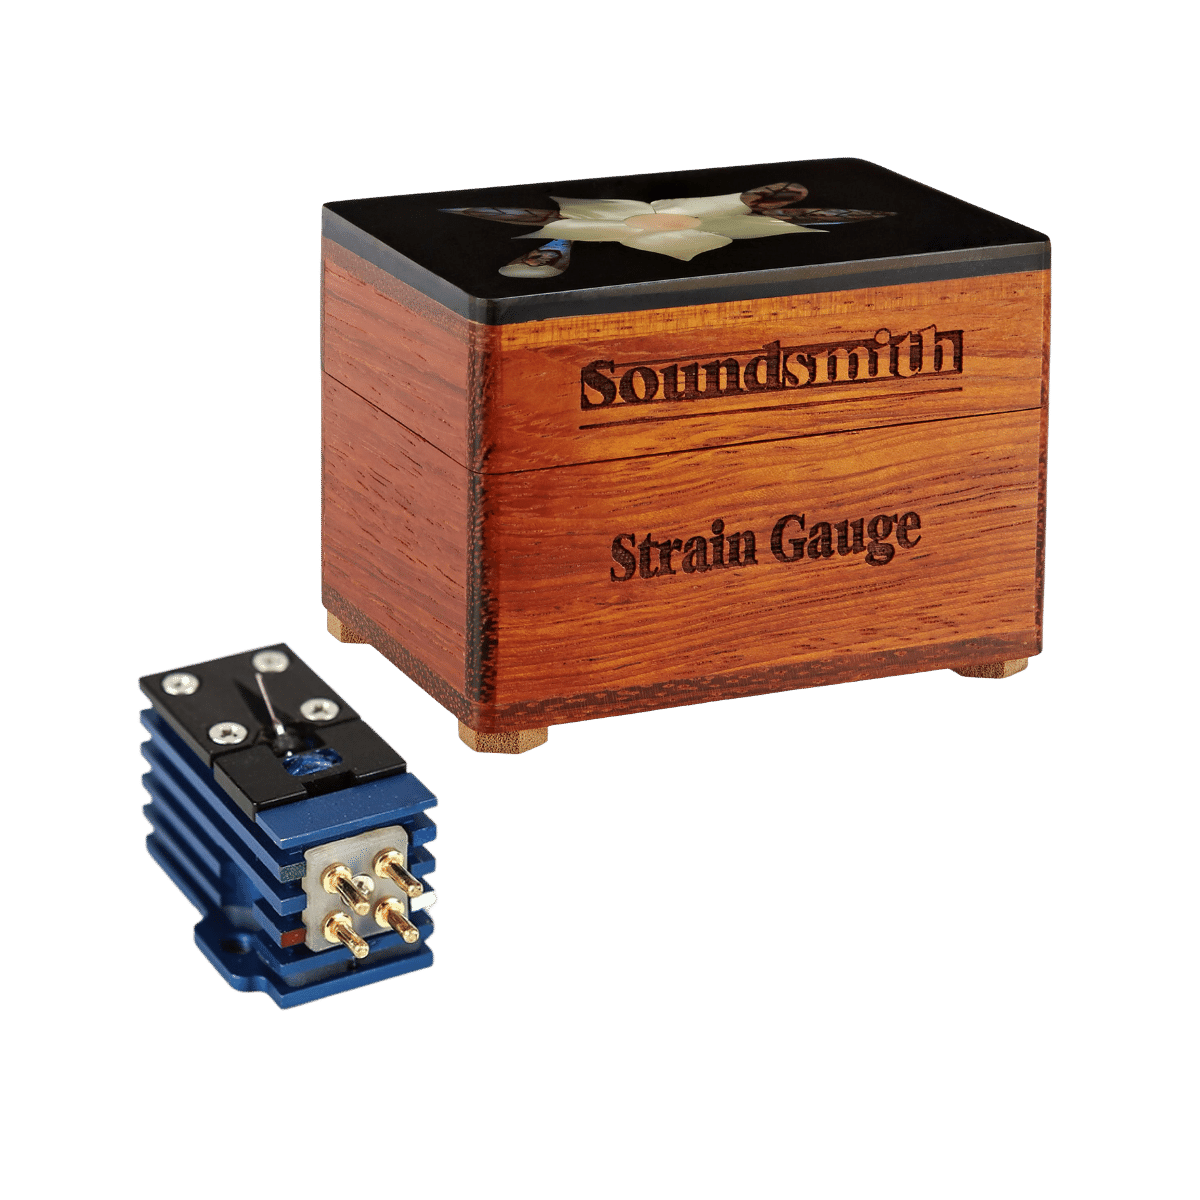 Soundsmith SG-230 Strain Gauge System